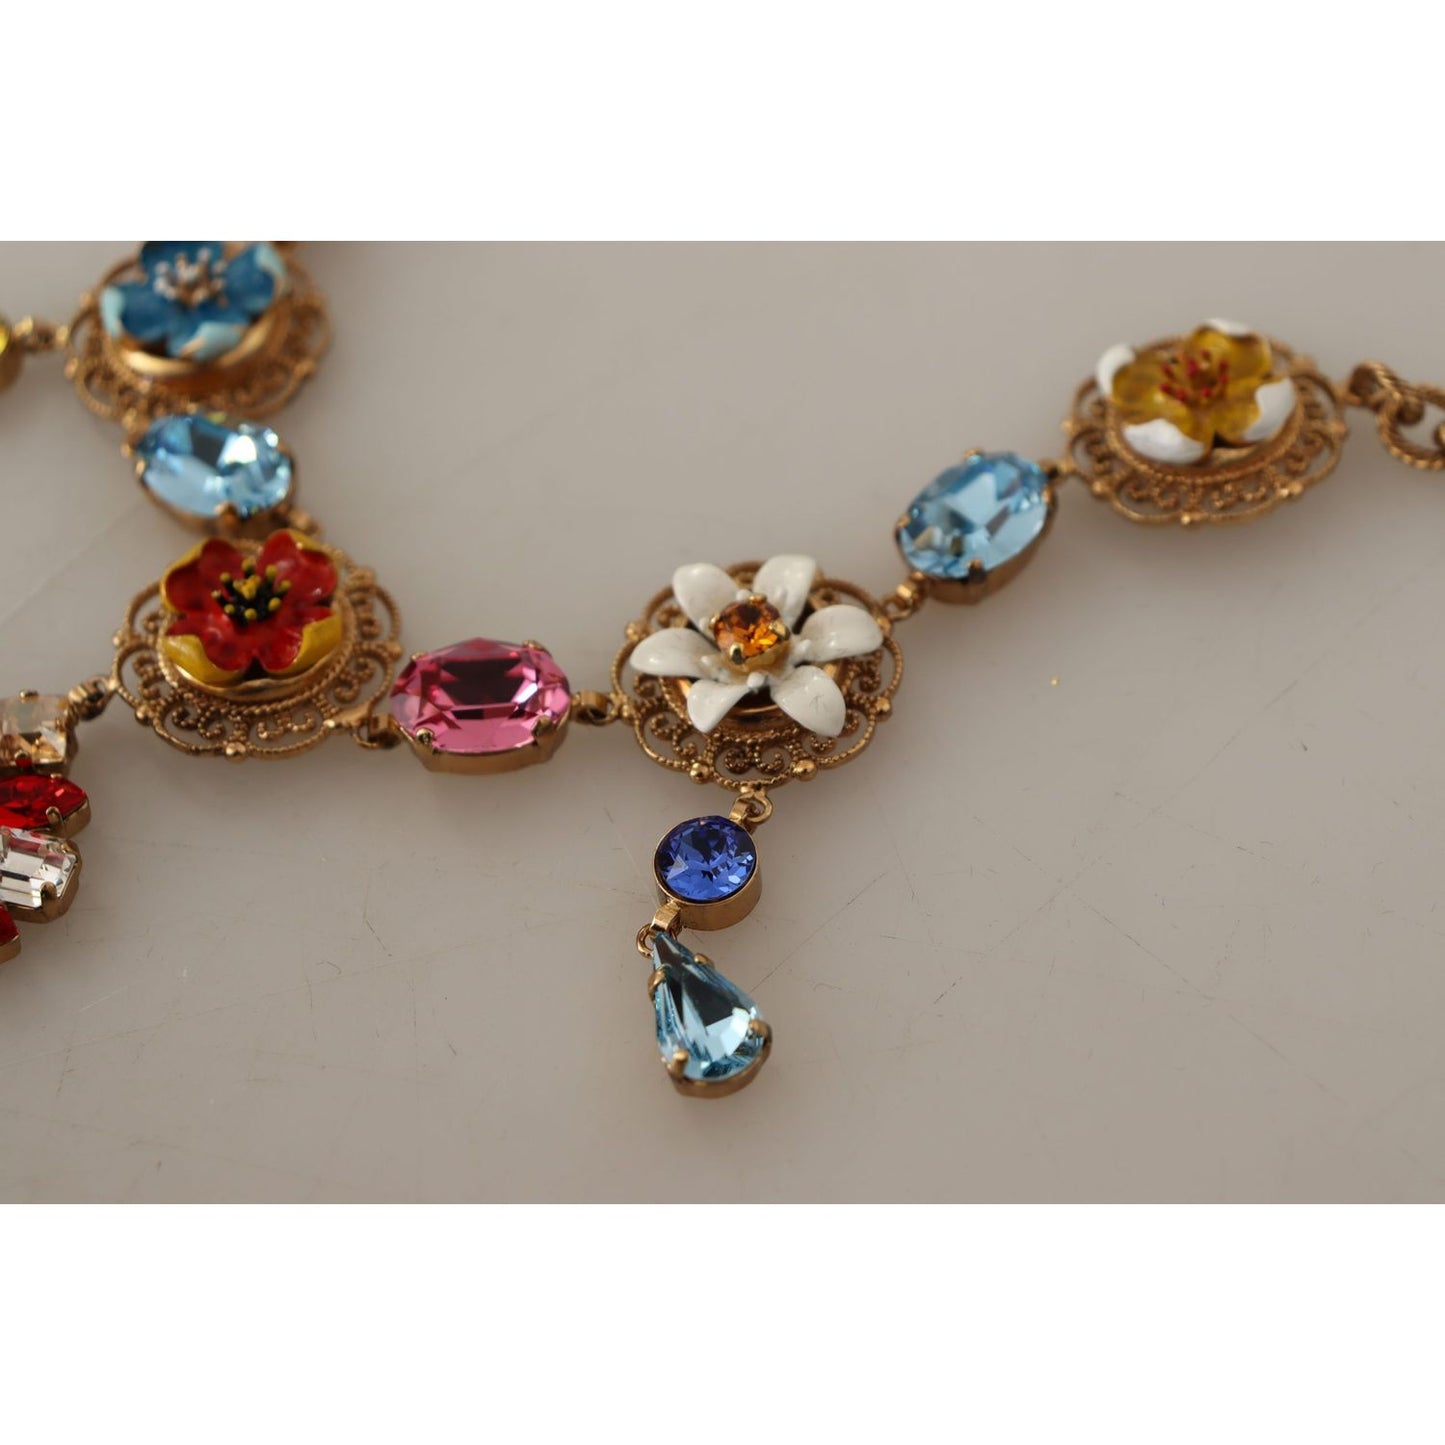 Dolce & Gabbana Elegant Floral Statement Necklace gold-brass-floral-sicily-charms-statement-necklace WOMAN NECKLACE IMG_2057-scaled-5e5113dc-c78.jpg